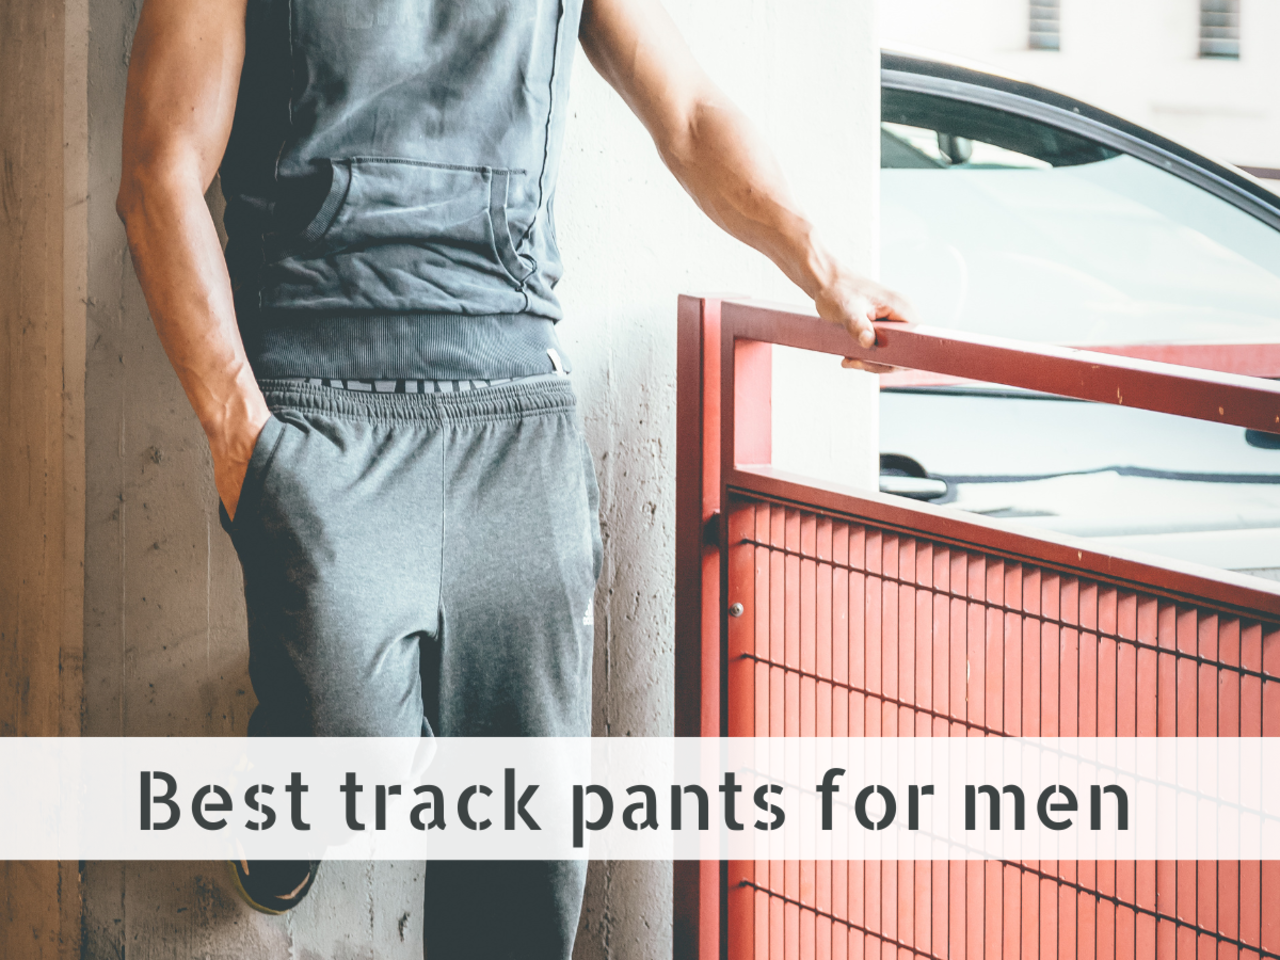 Buy Mens Running Breathable Trousers Dry  Dark Blue Online  Decathlon